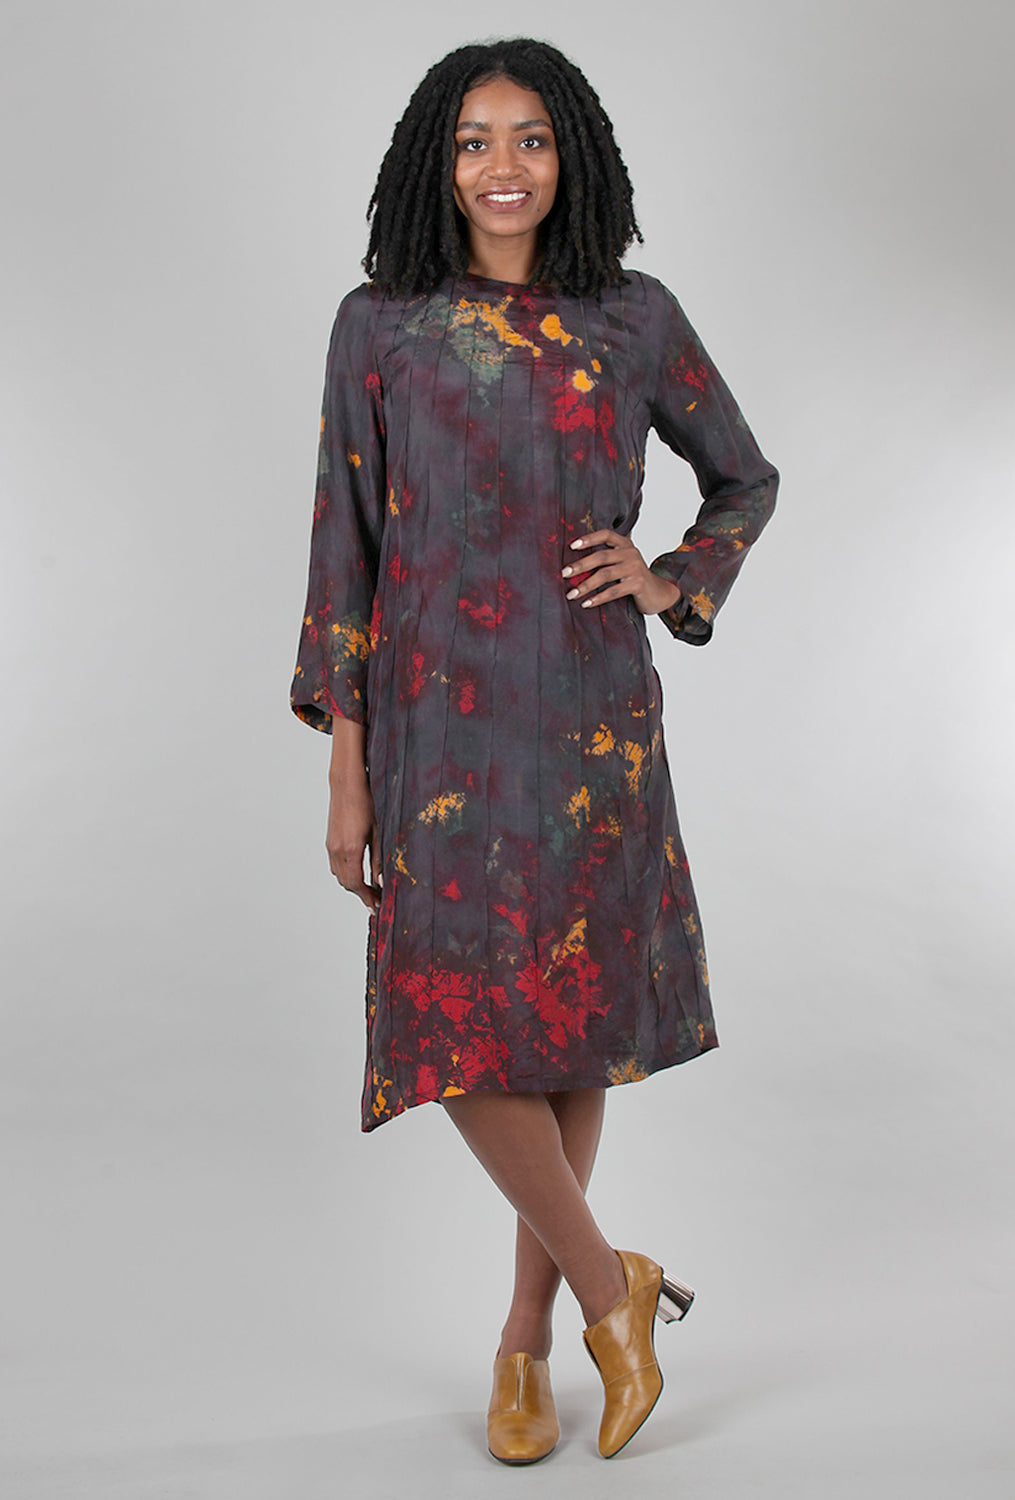 Neeru Kumar Reverse-Dye Silk Dress, Mocha/Mustard 